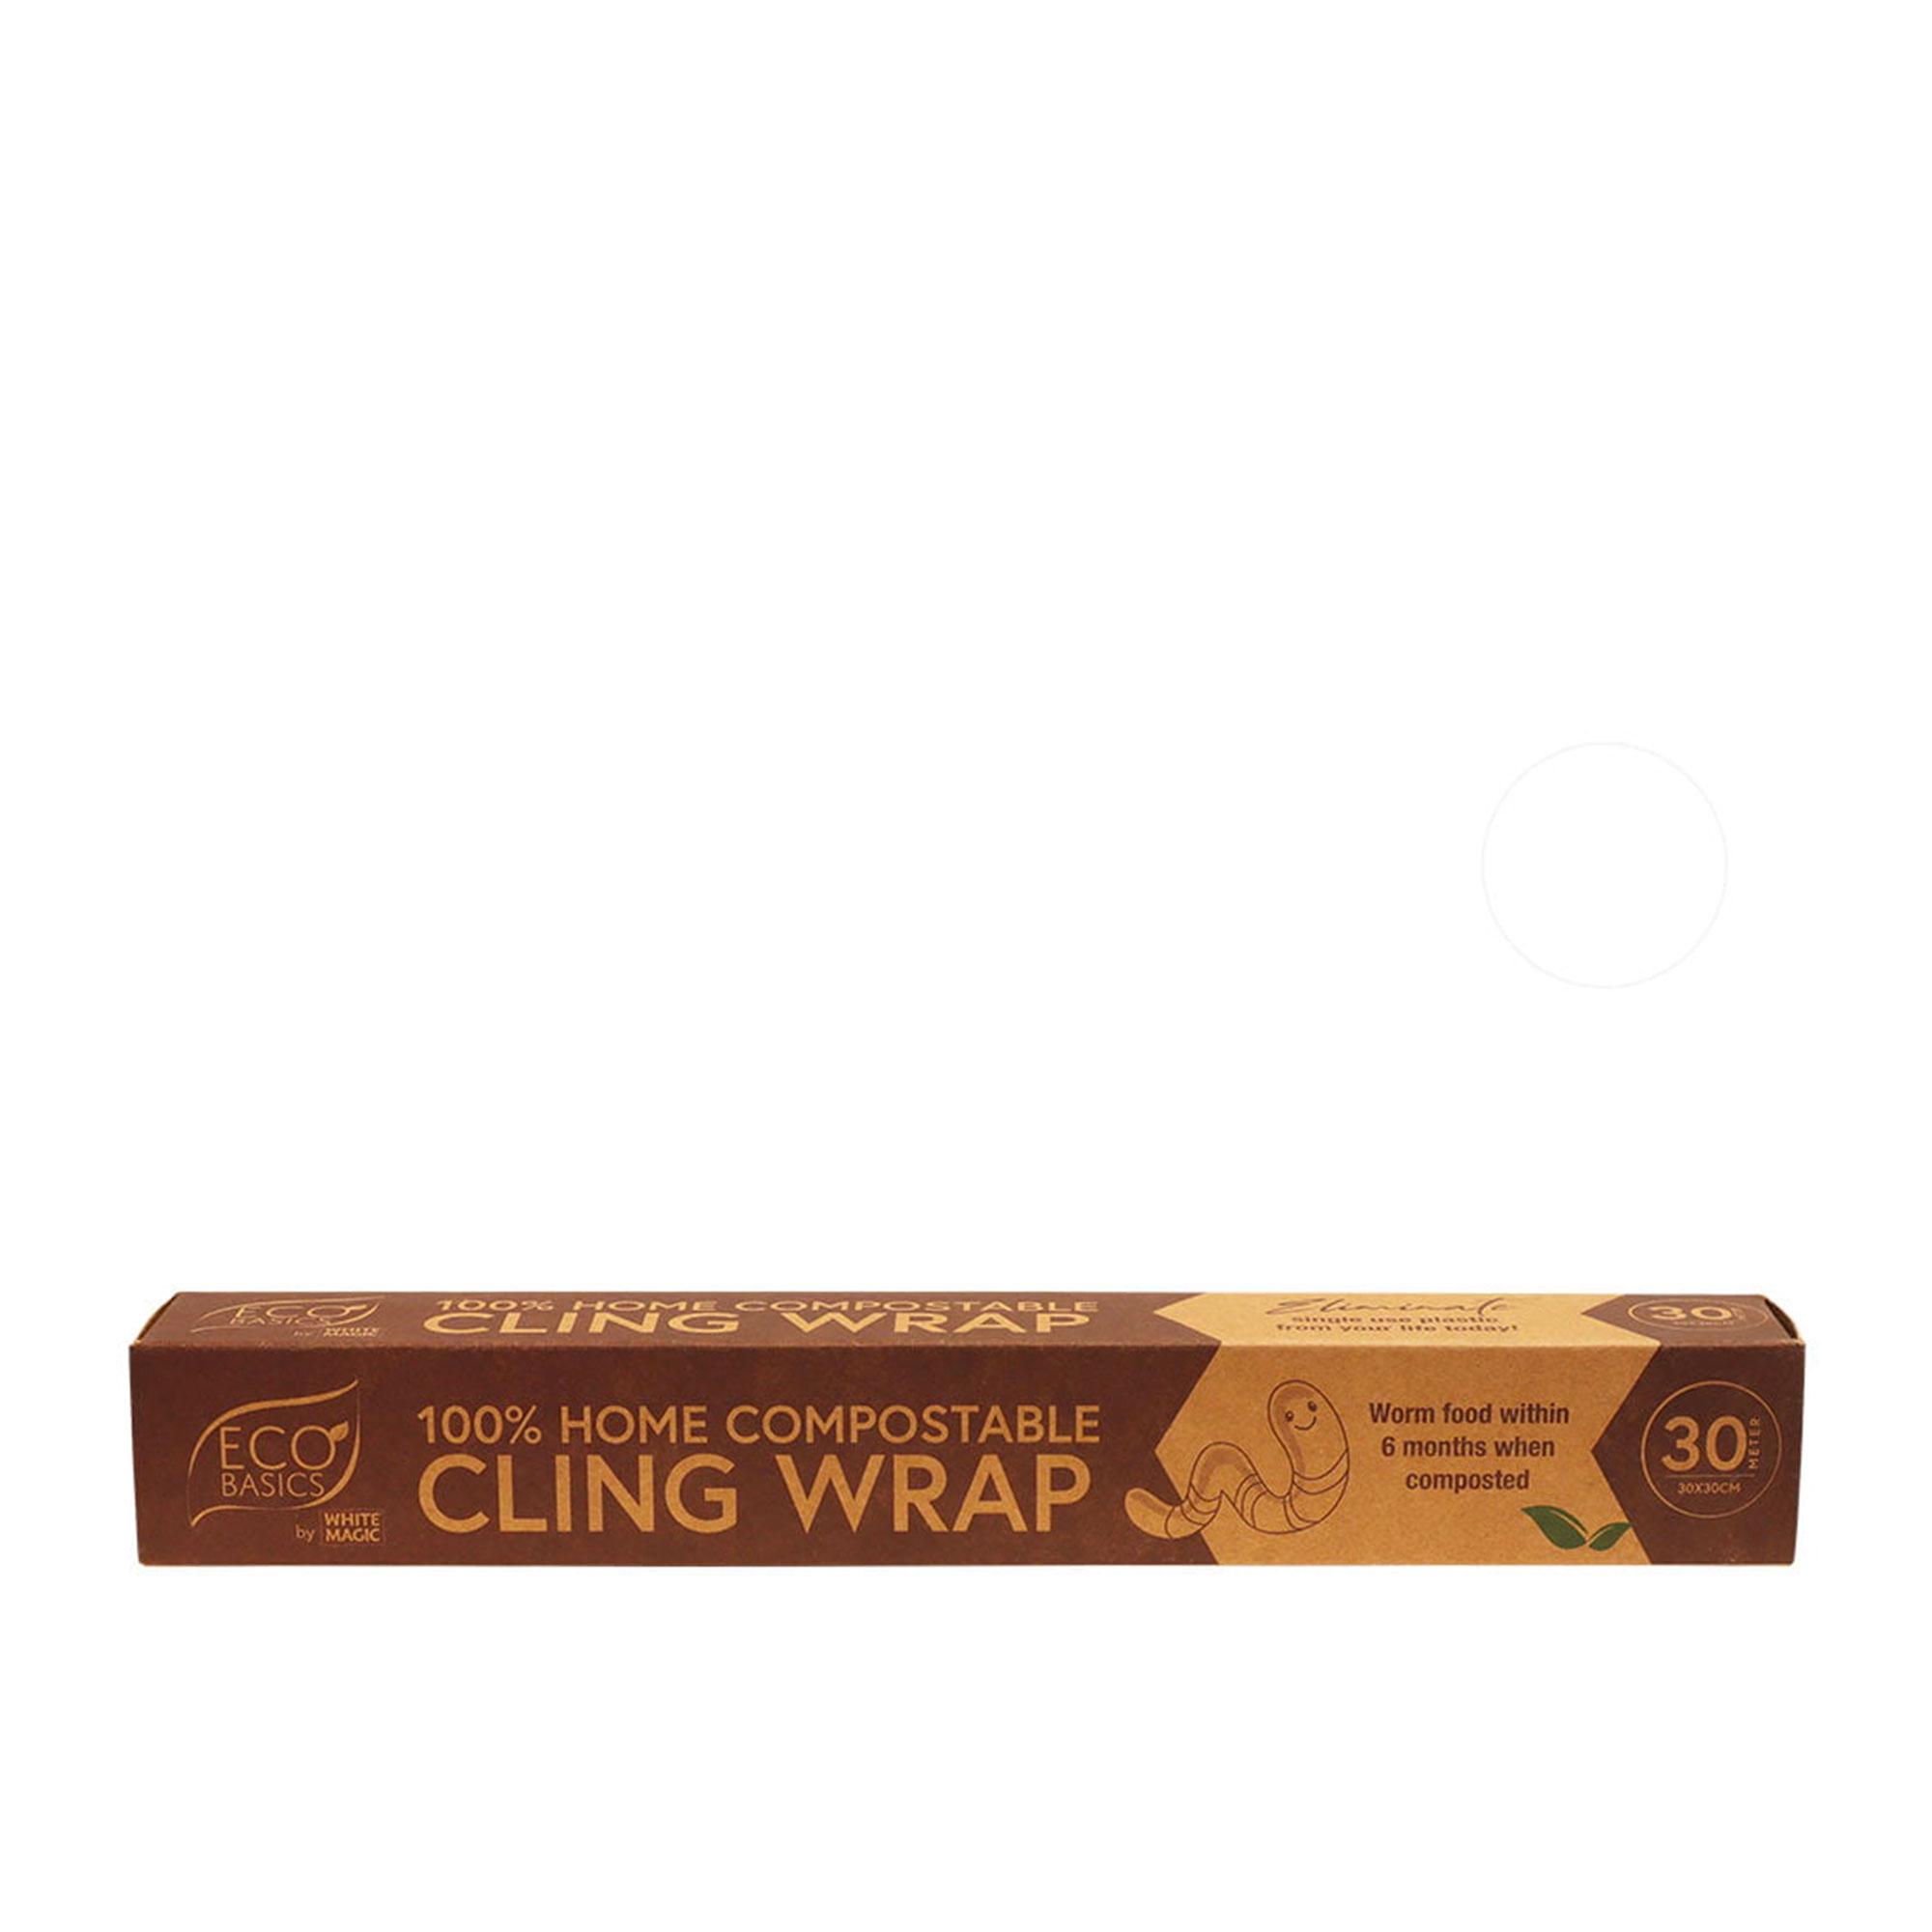 White Magic Eco Basics Home Compostable Cling Wrap Image 6